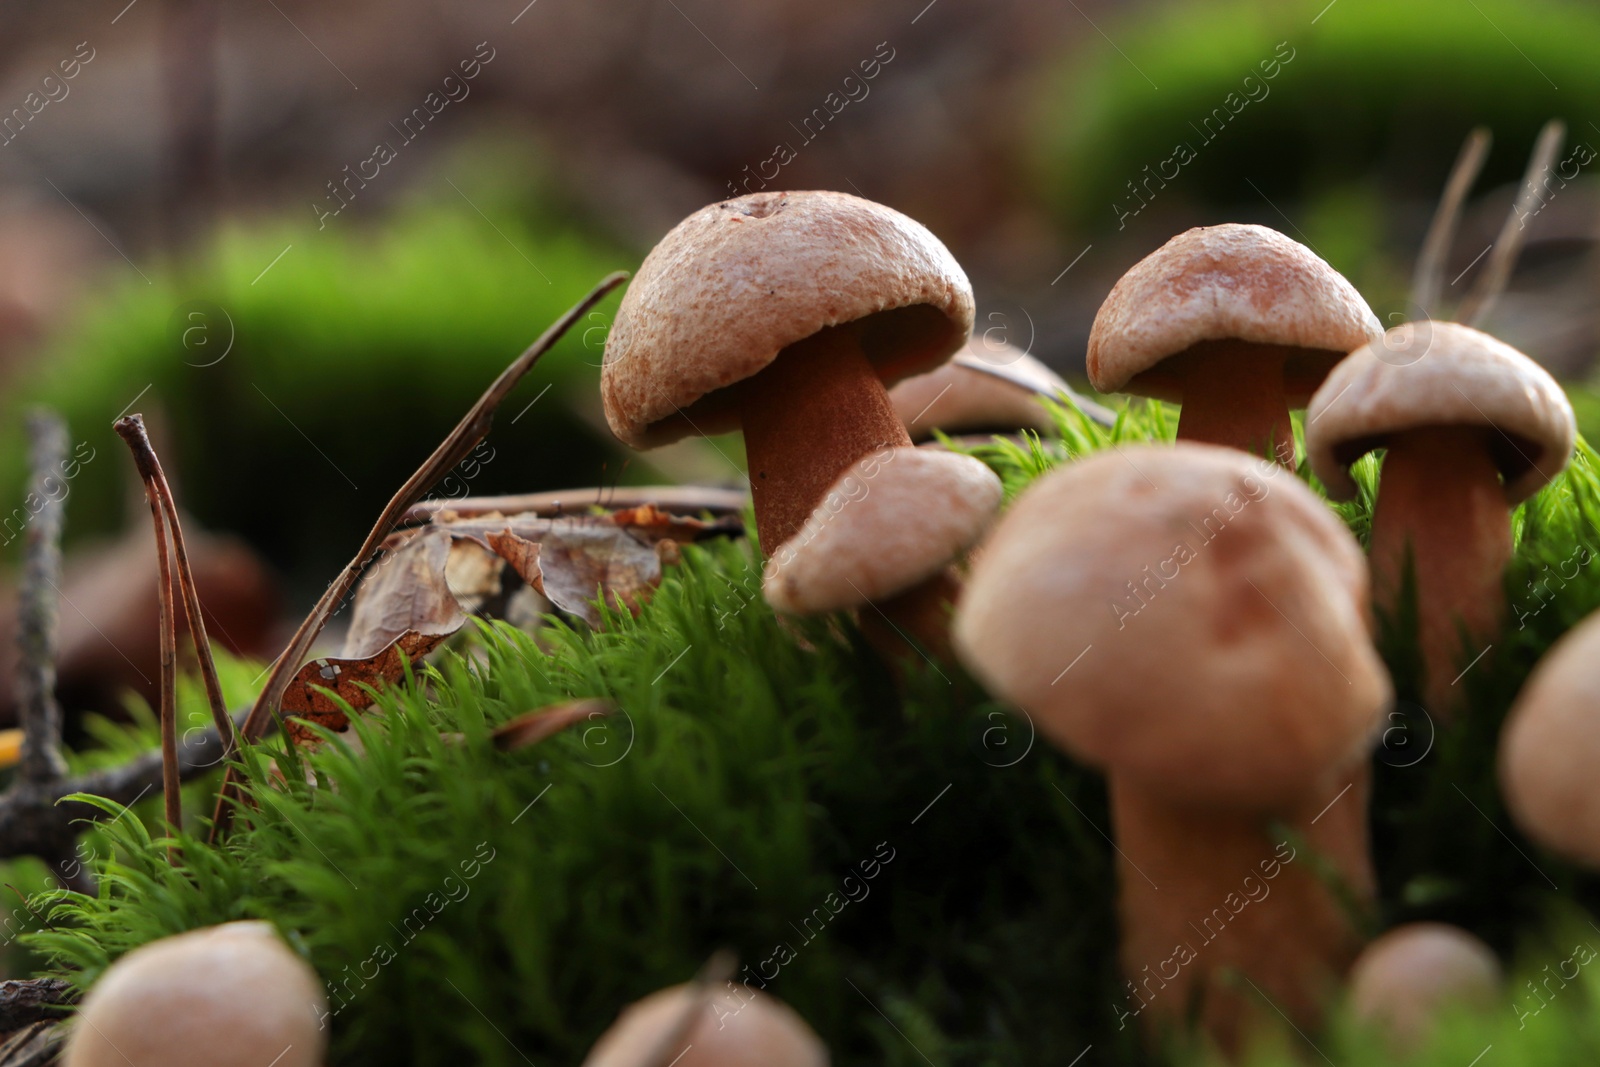 Photo of Beautiful small mushrooms growing in grass outdoors, closeup